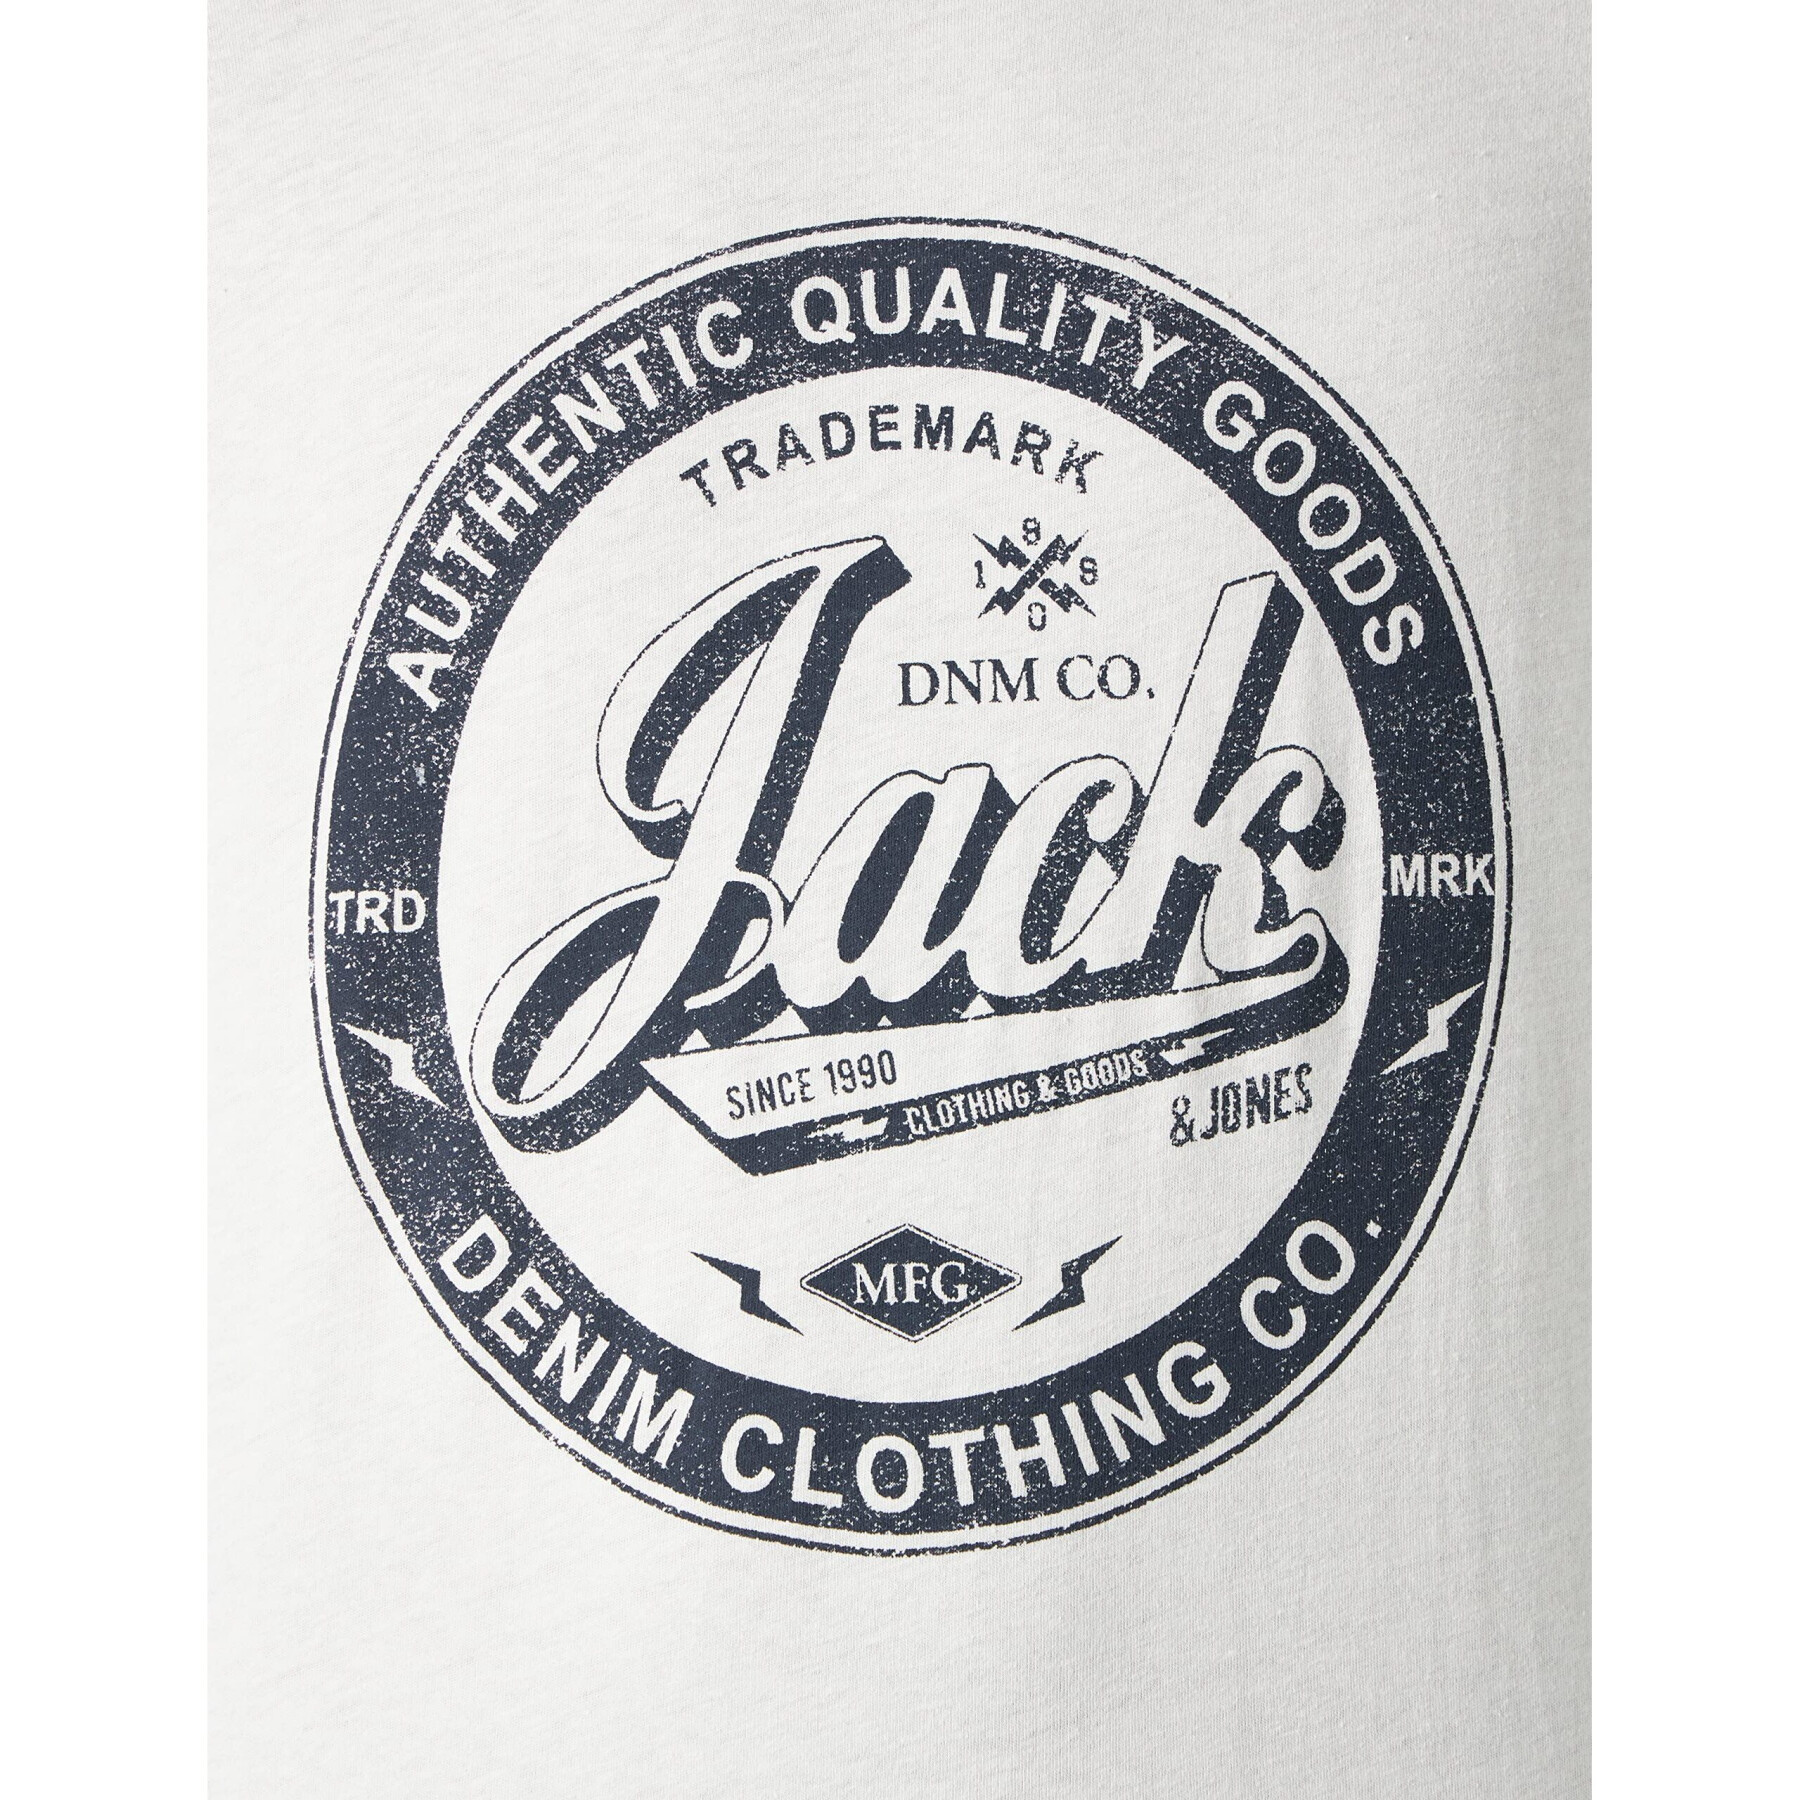 Collar-o T-shirt Jack & Jones Jjejeans 22/23